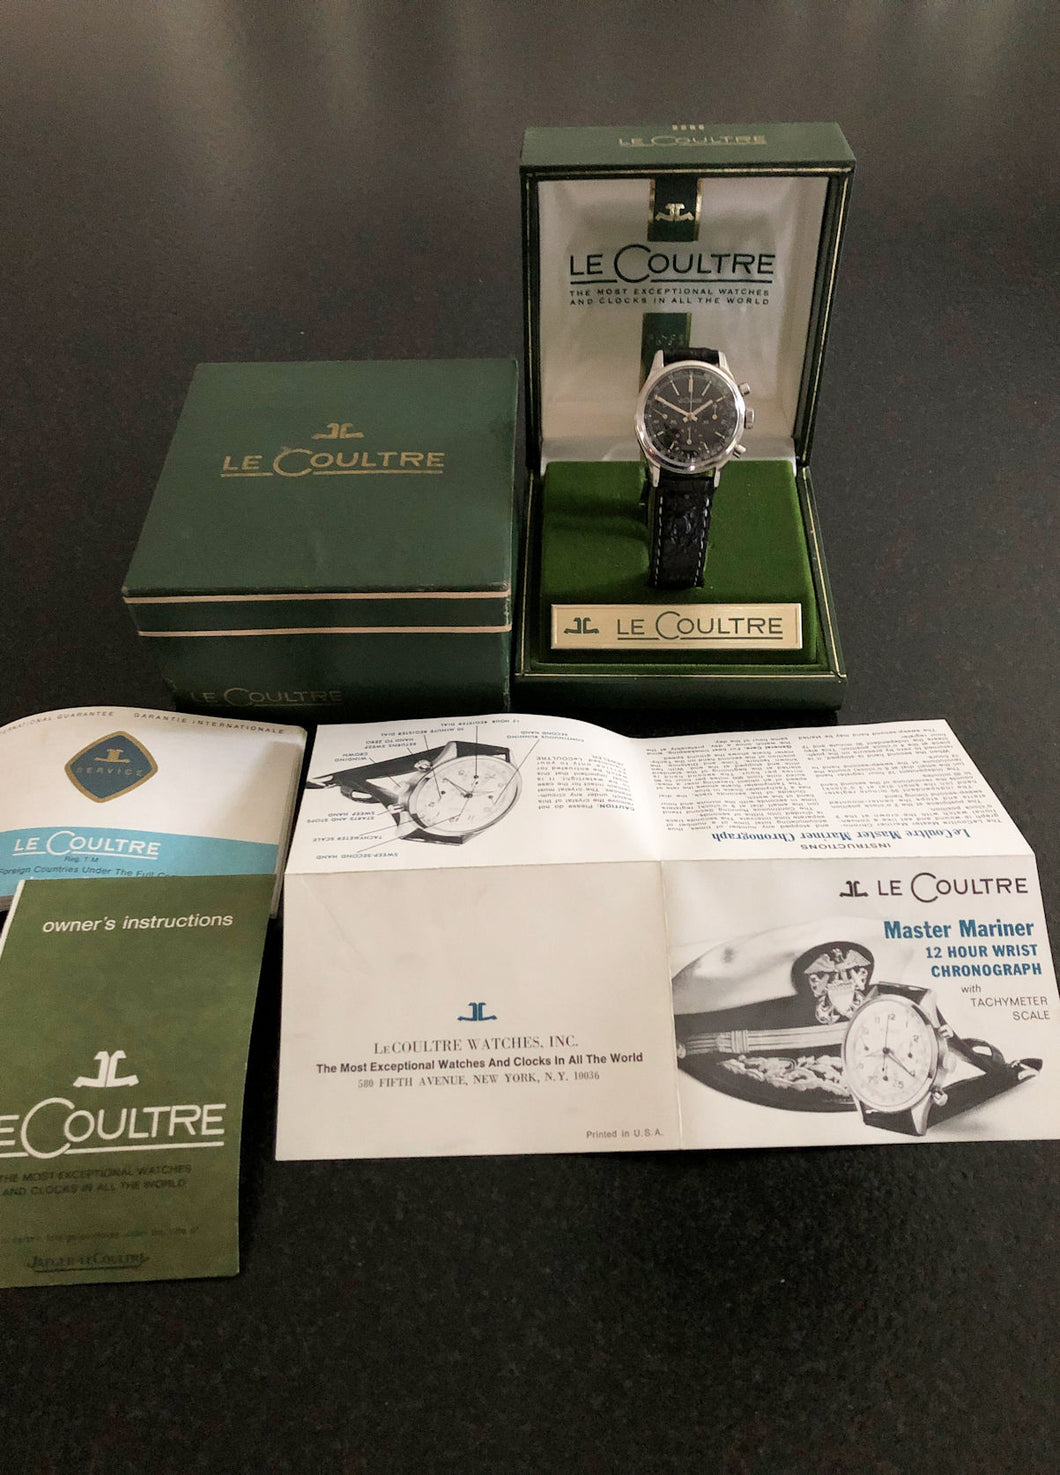 LNIB Vintage Chronograph Watch Jaeger-LeCoultre E335 Master Mariner with Valjoux 72 Movement